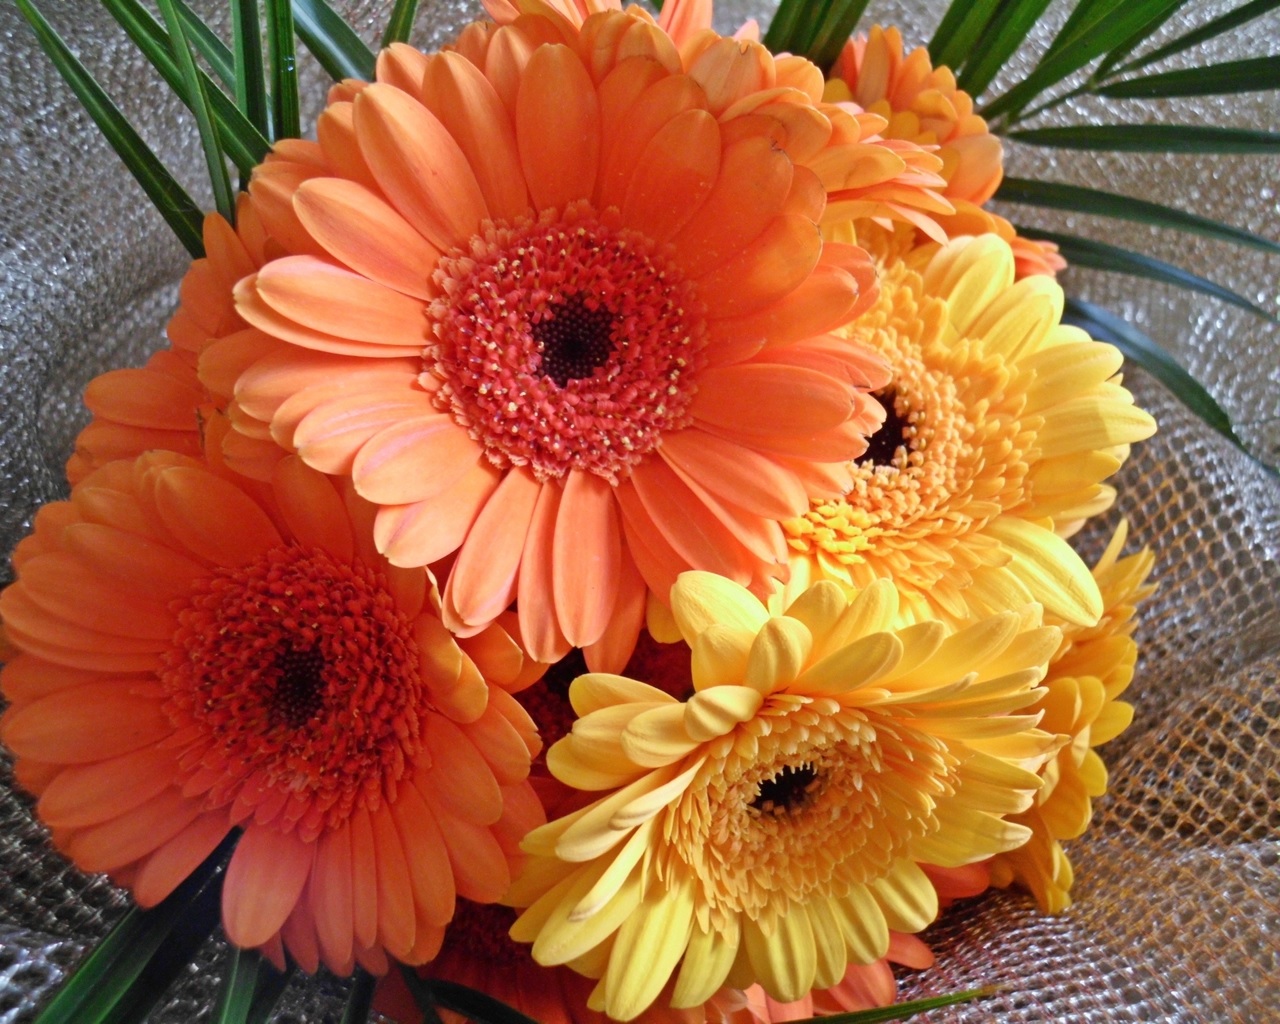 Bouquet de gérberas amarelas e laranja